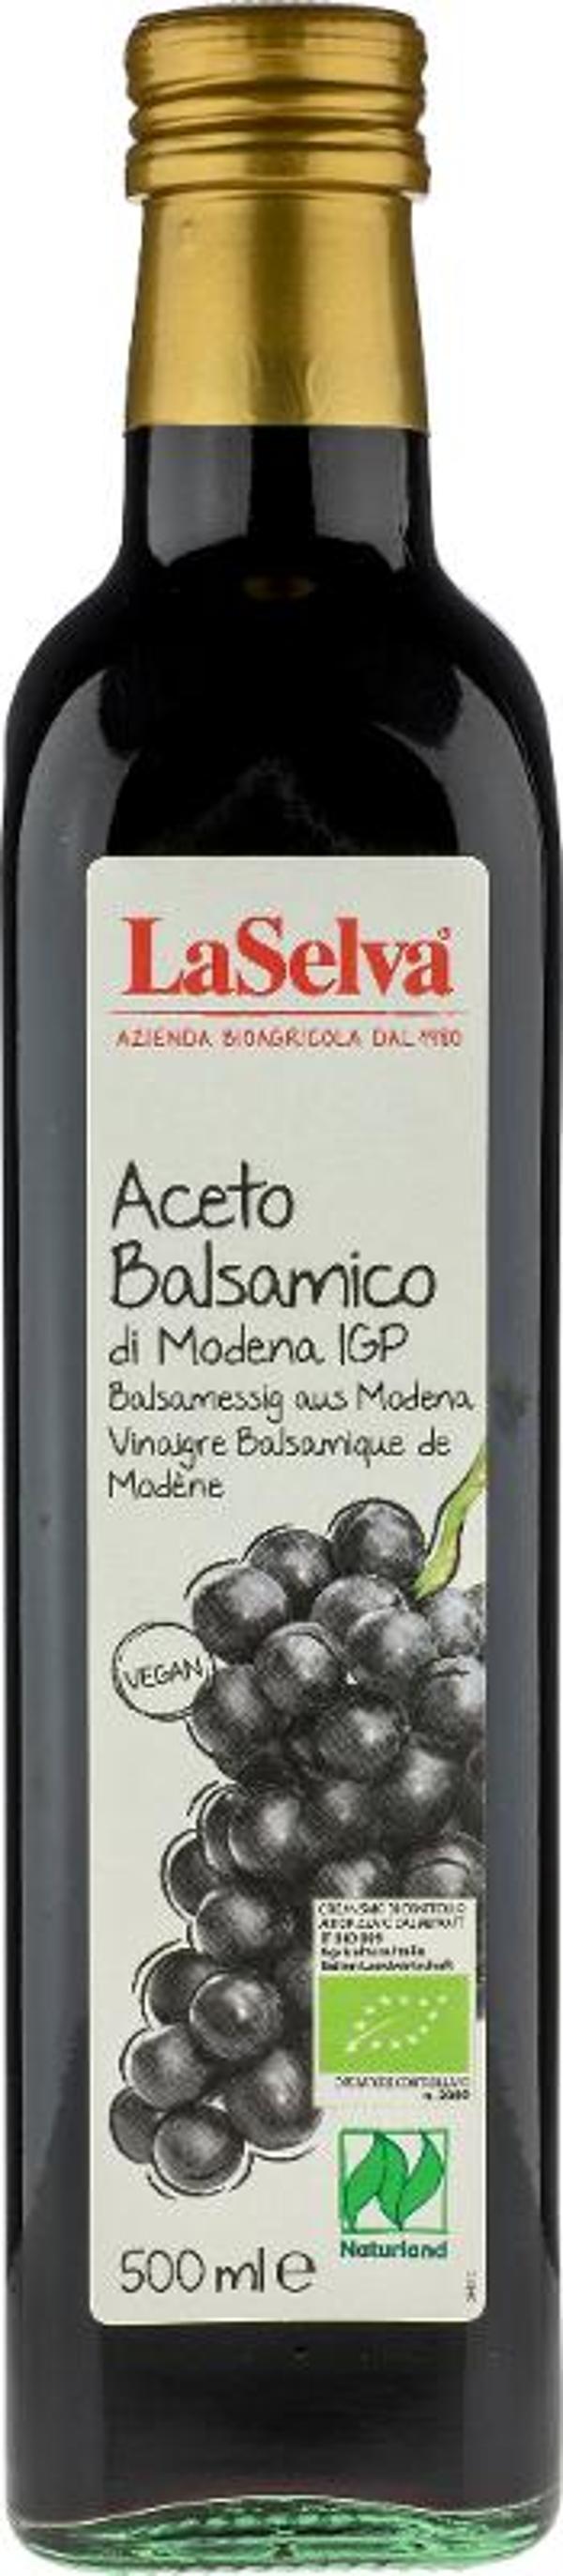 Produktfoto zu Balsamico di Modena Essig